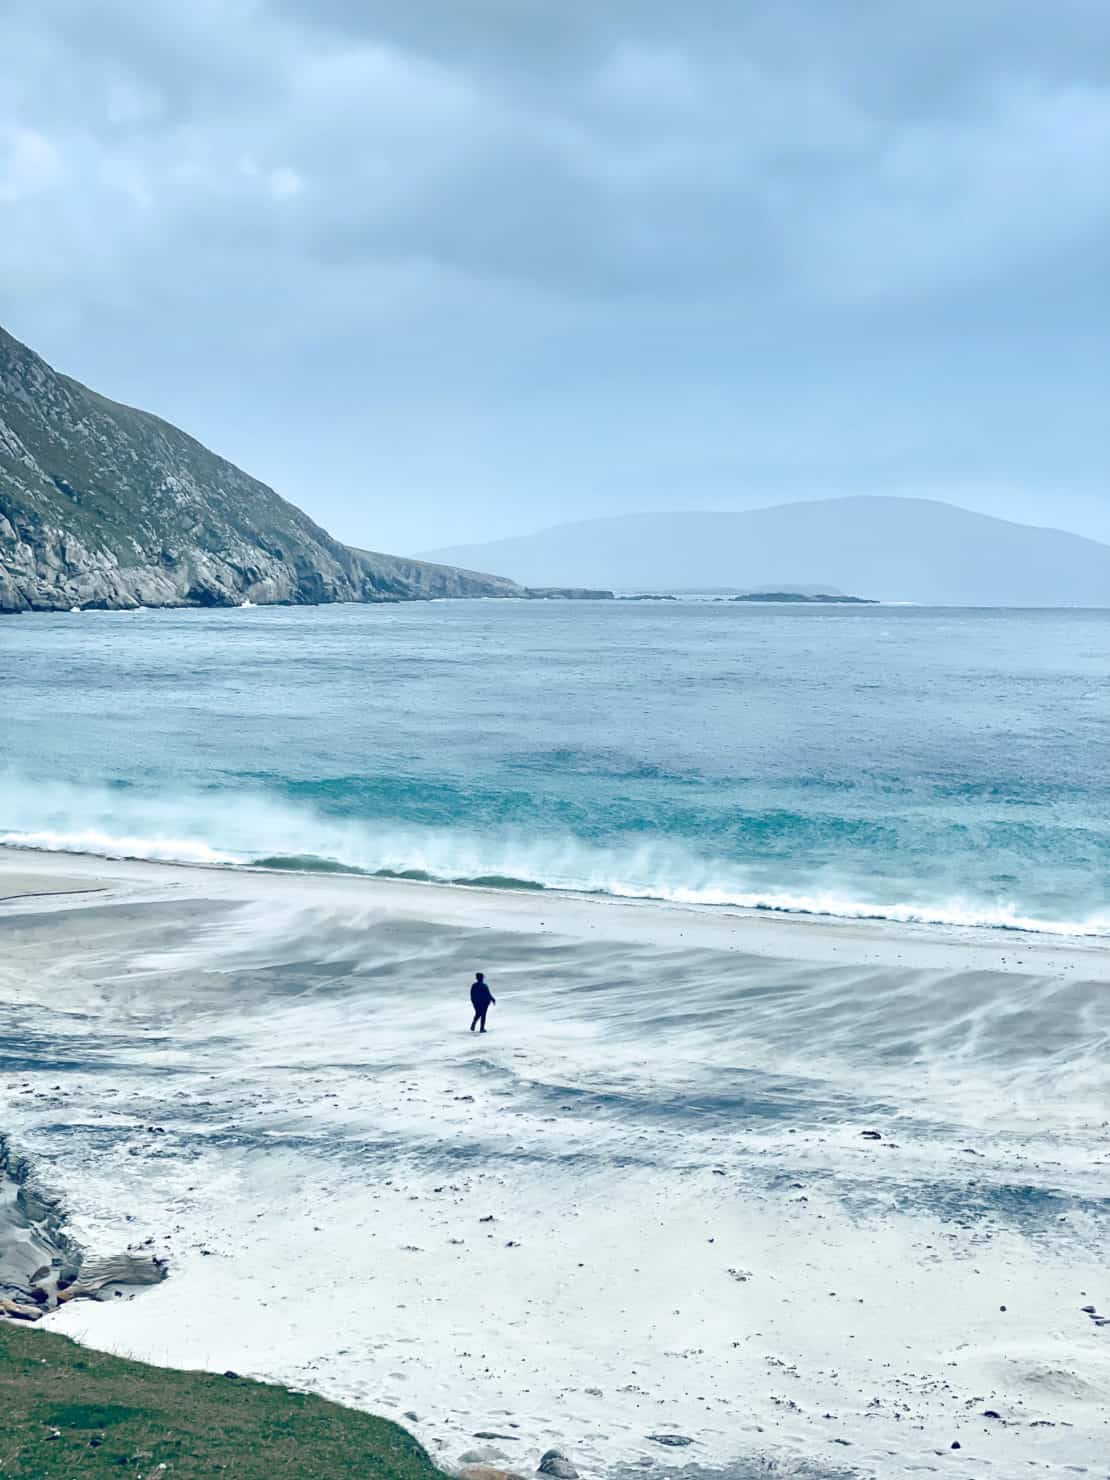 Ireland - Achill Island - Keem Beach - small figure walking on the beach in the wind